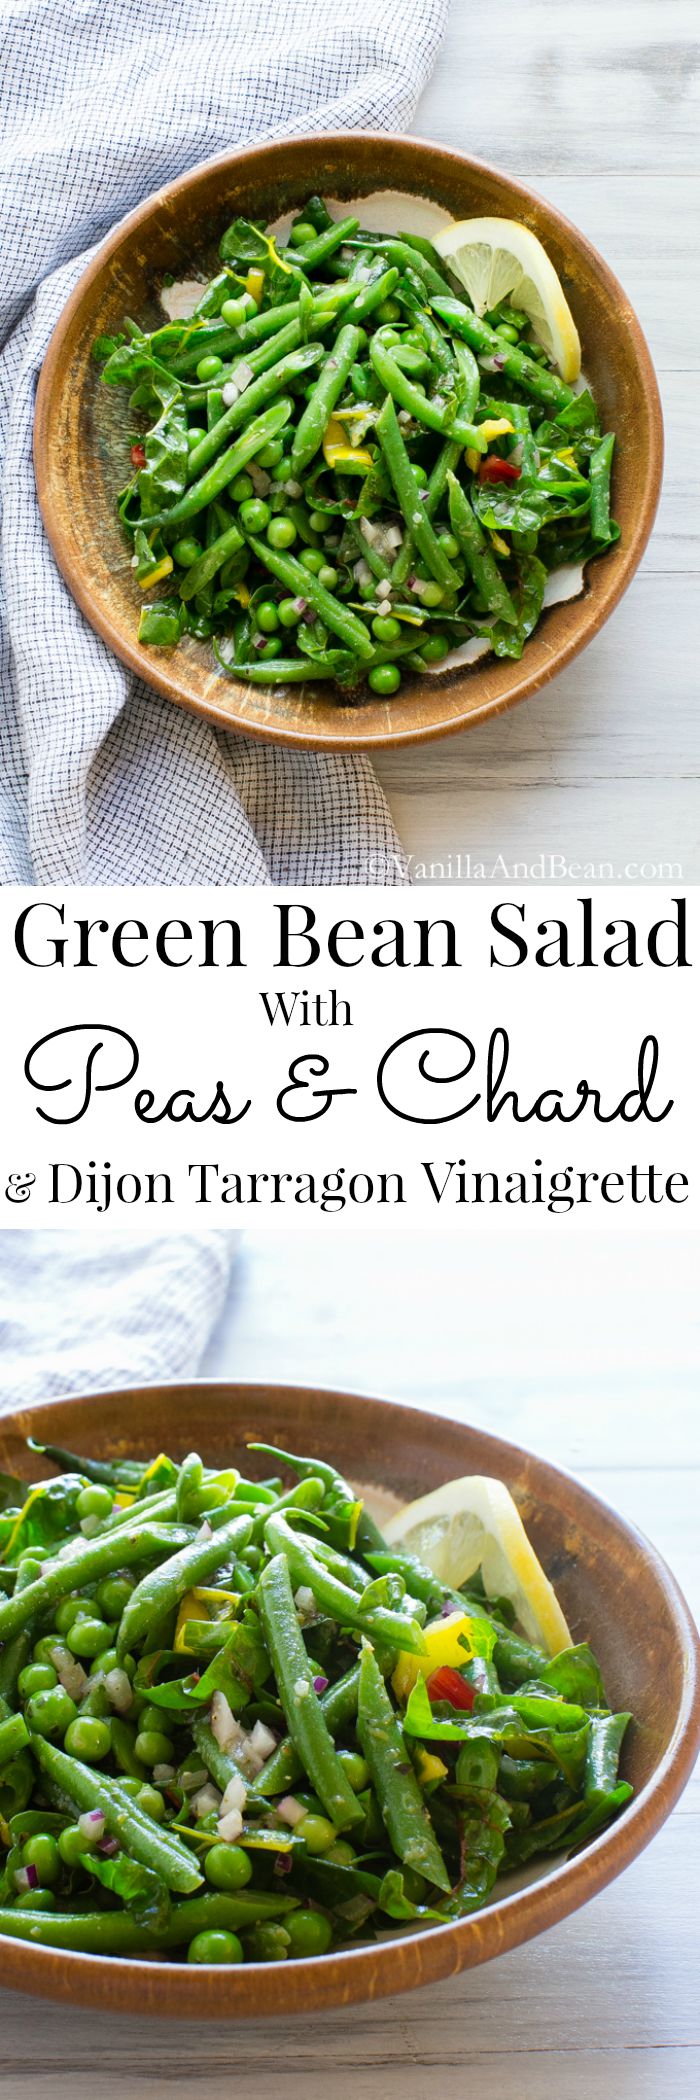 Green Bean Salad with Peas, Chard and Dijon Tarragon Vinaigrette | Vanilla And Bean